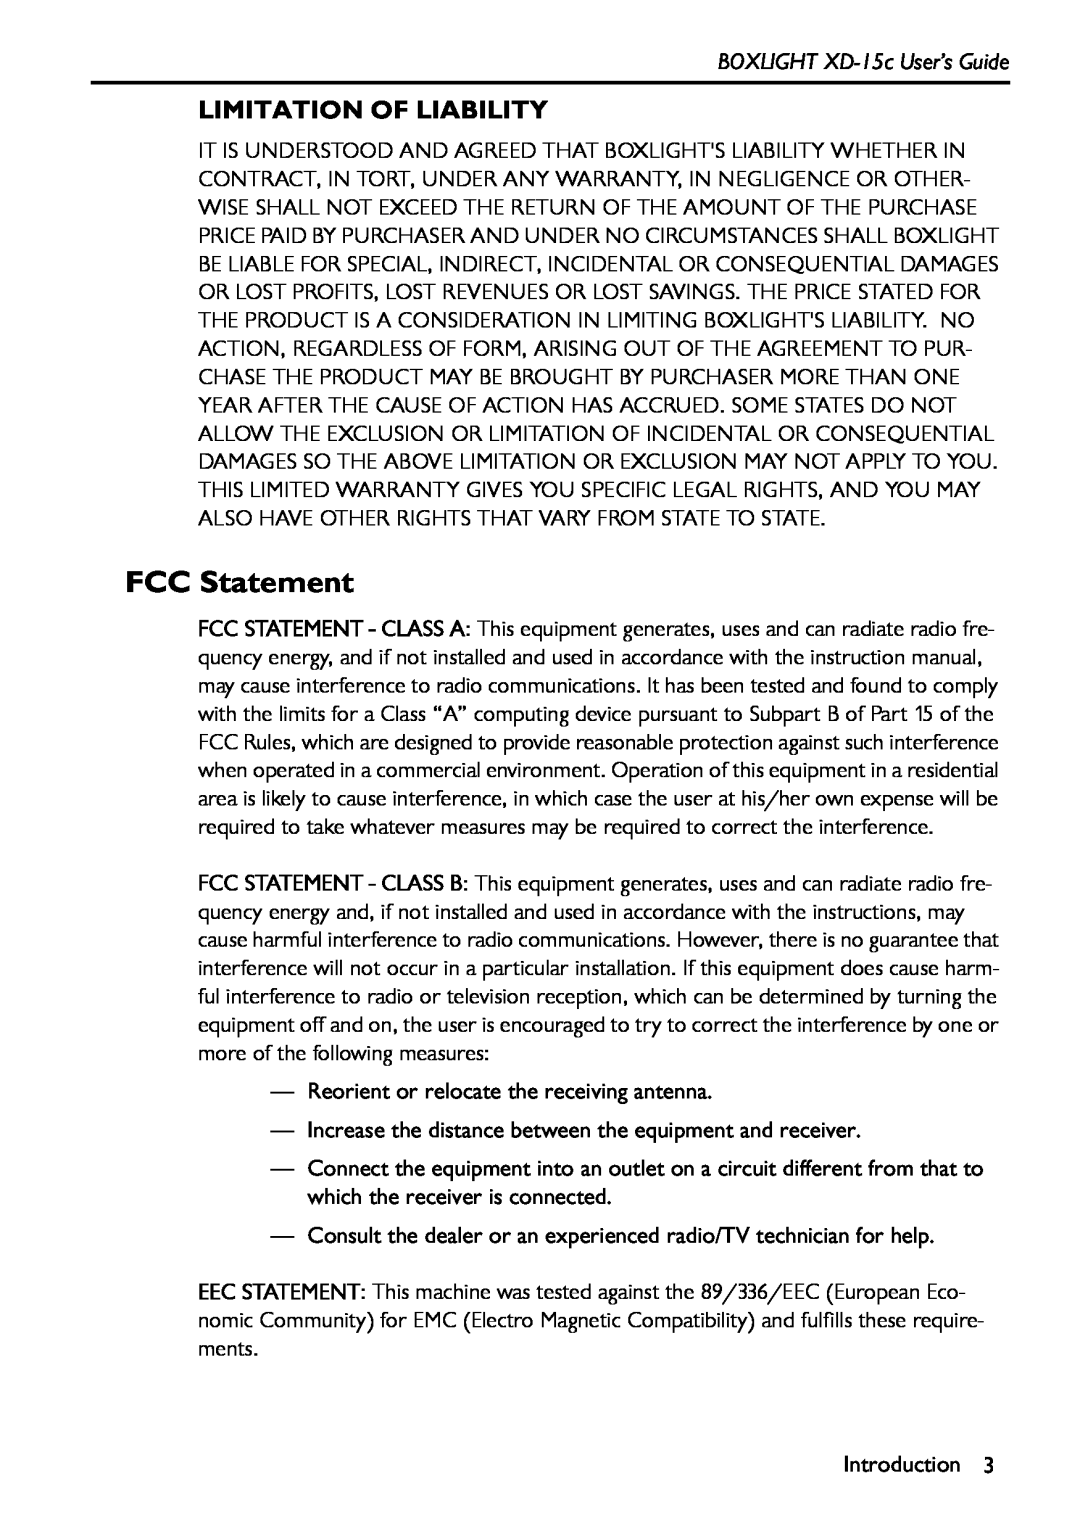 BOXLIGHT manual FCC Statement, Limitation Of Liability, BOXLIGHT XD-15c User’s Guide 